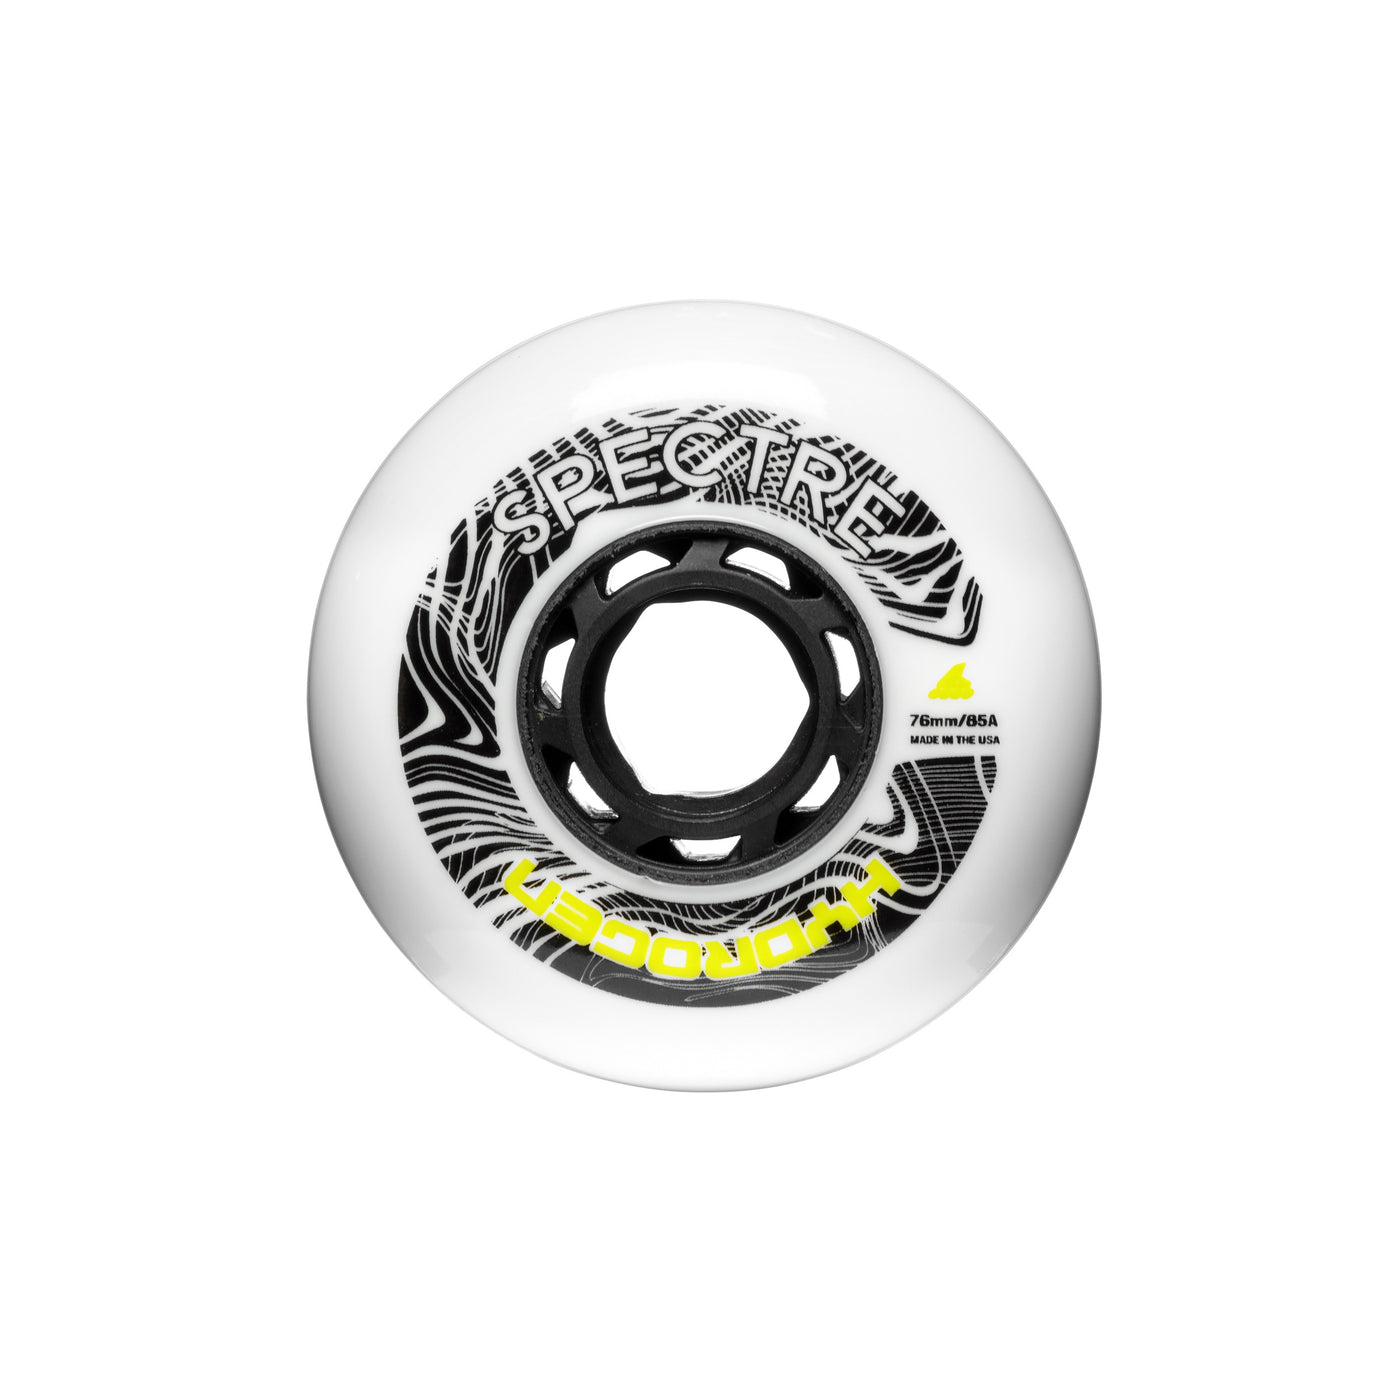 Rollerblade Hydrogen Spectre Inline Skate Wheels White 76mm 85a - Set of 4